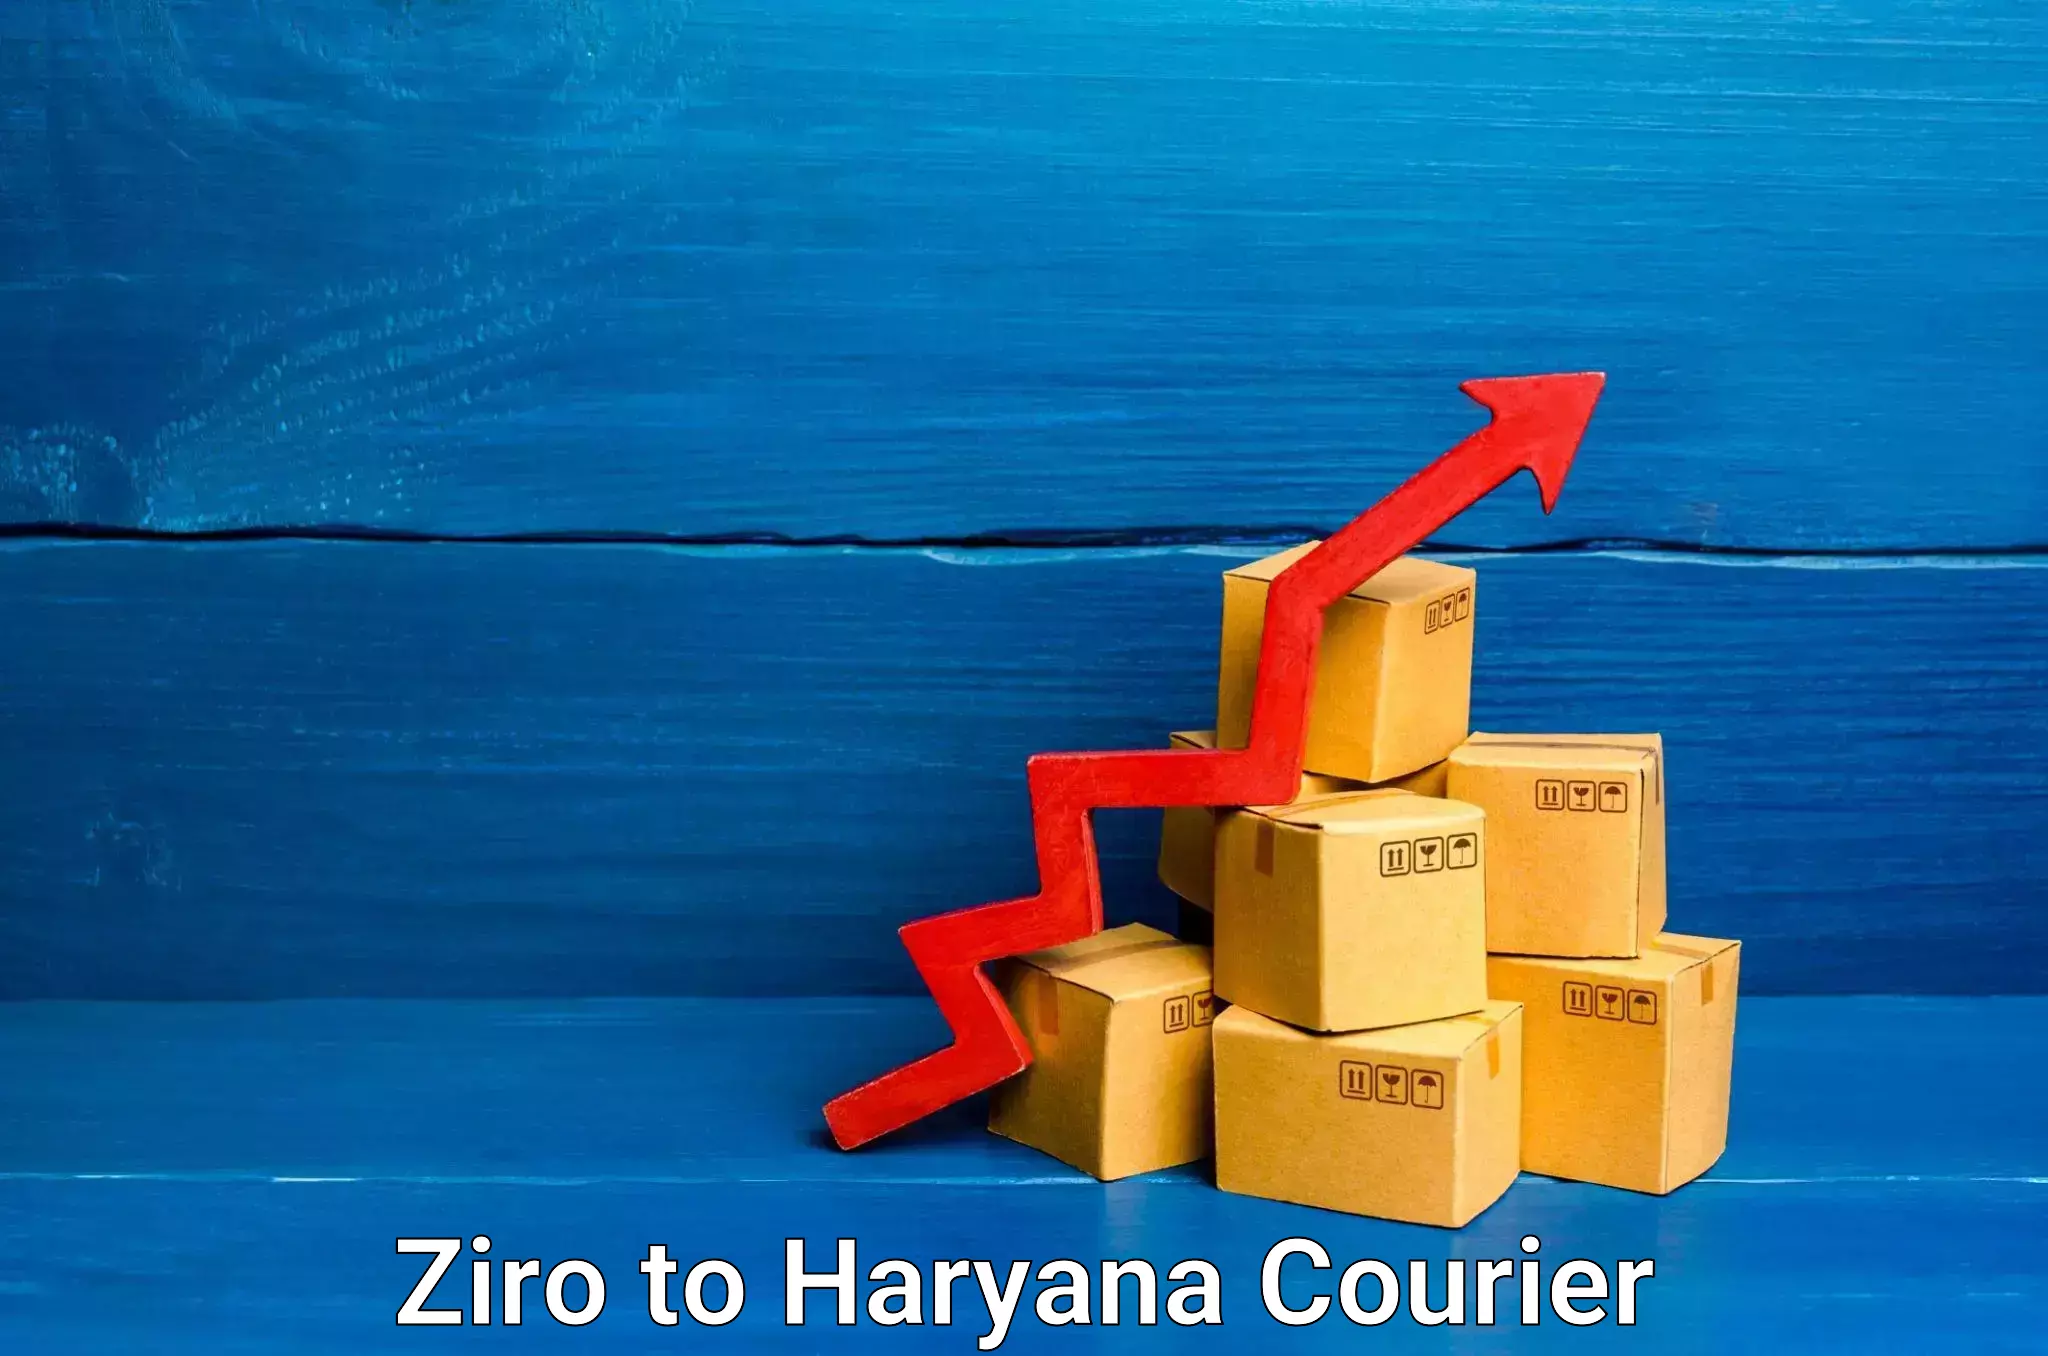 Express delivery capabilities in Ziro to Bilaspur Haryana